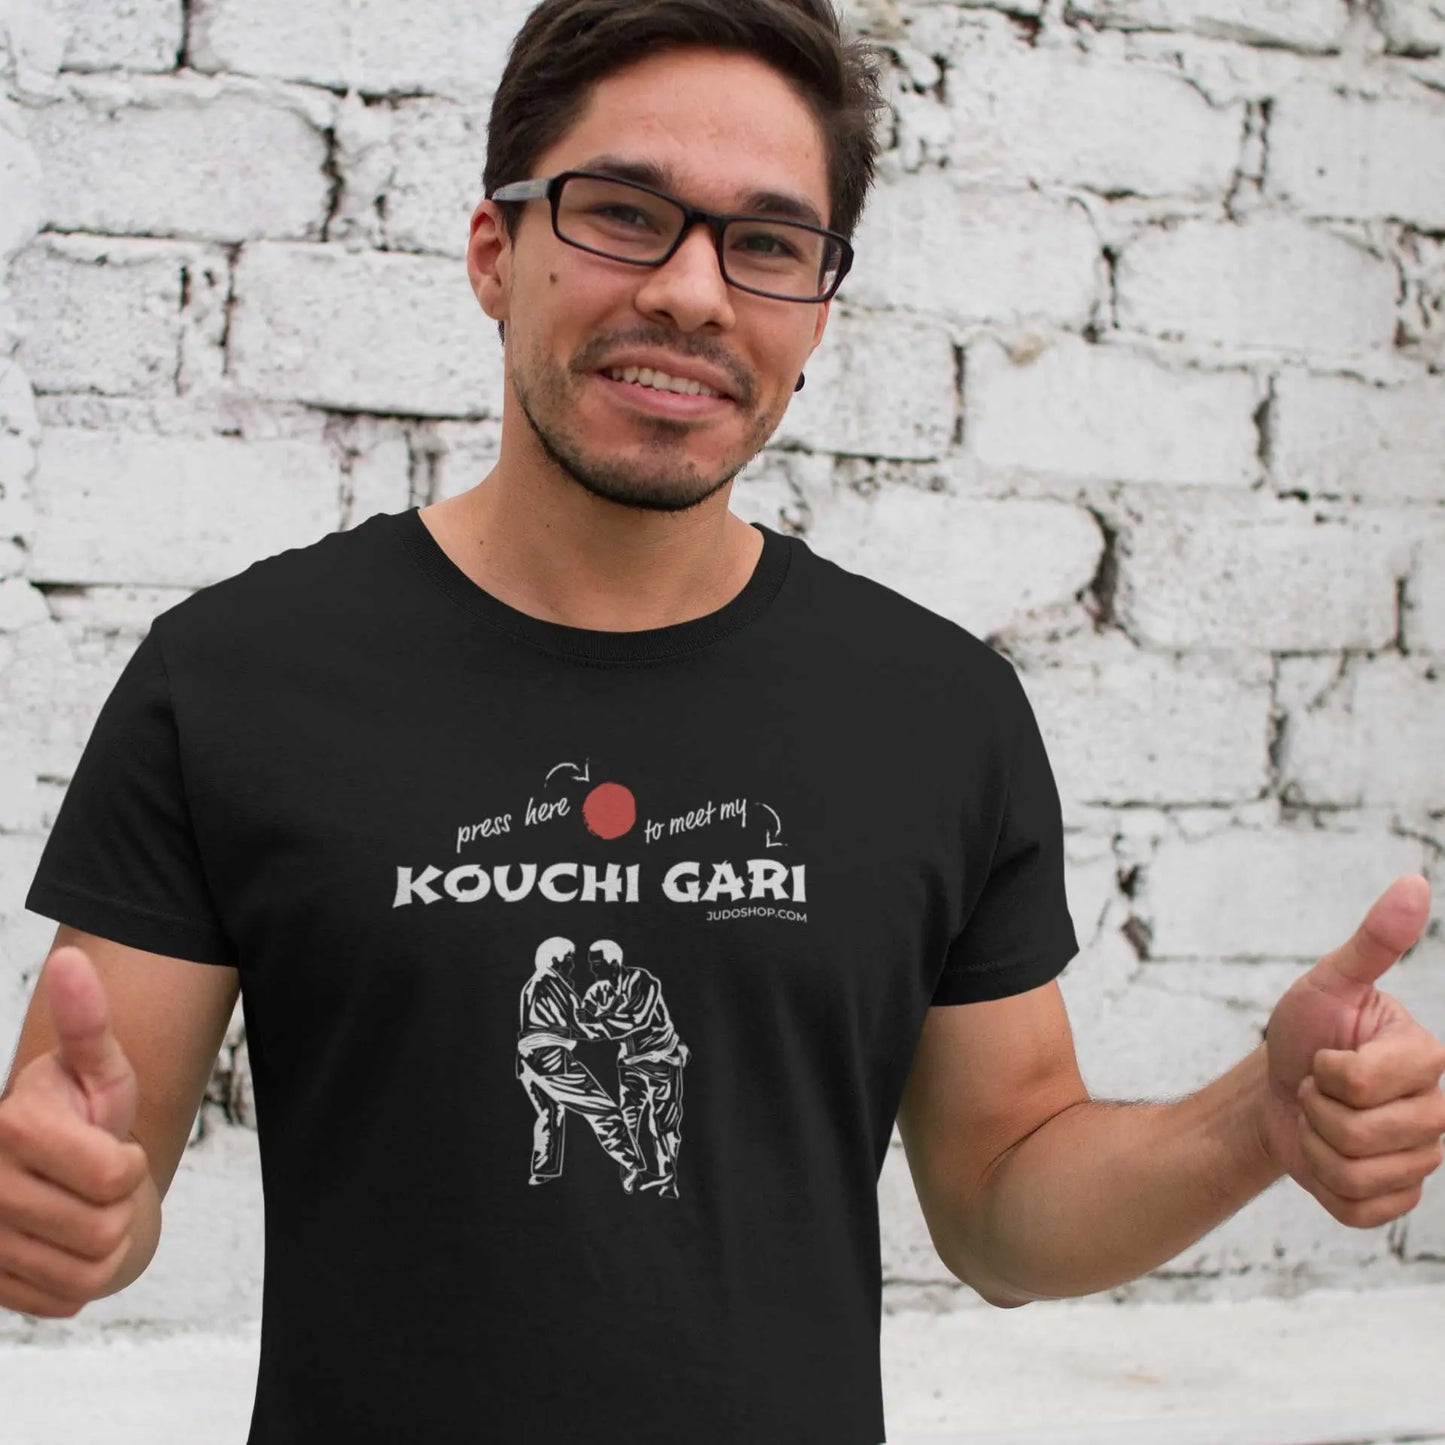 Judo Kouchi Gari T-Shirt - Press Here Design - JudoShop.com